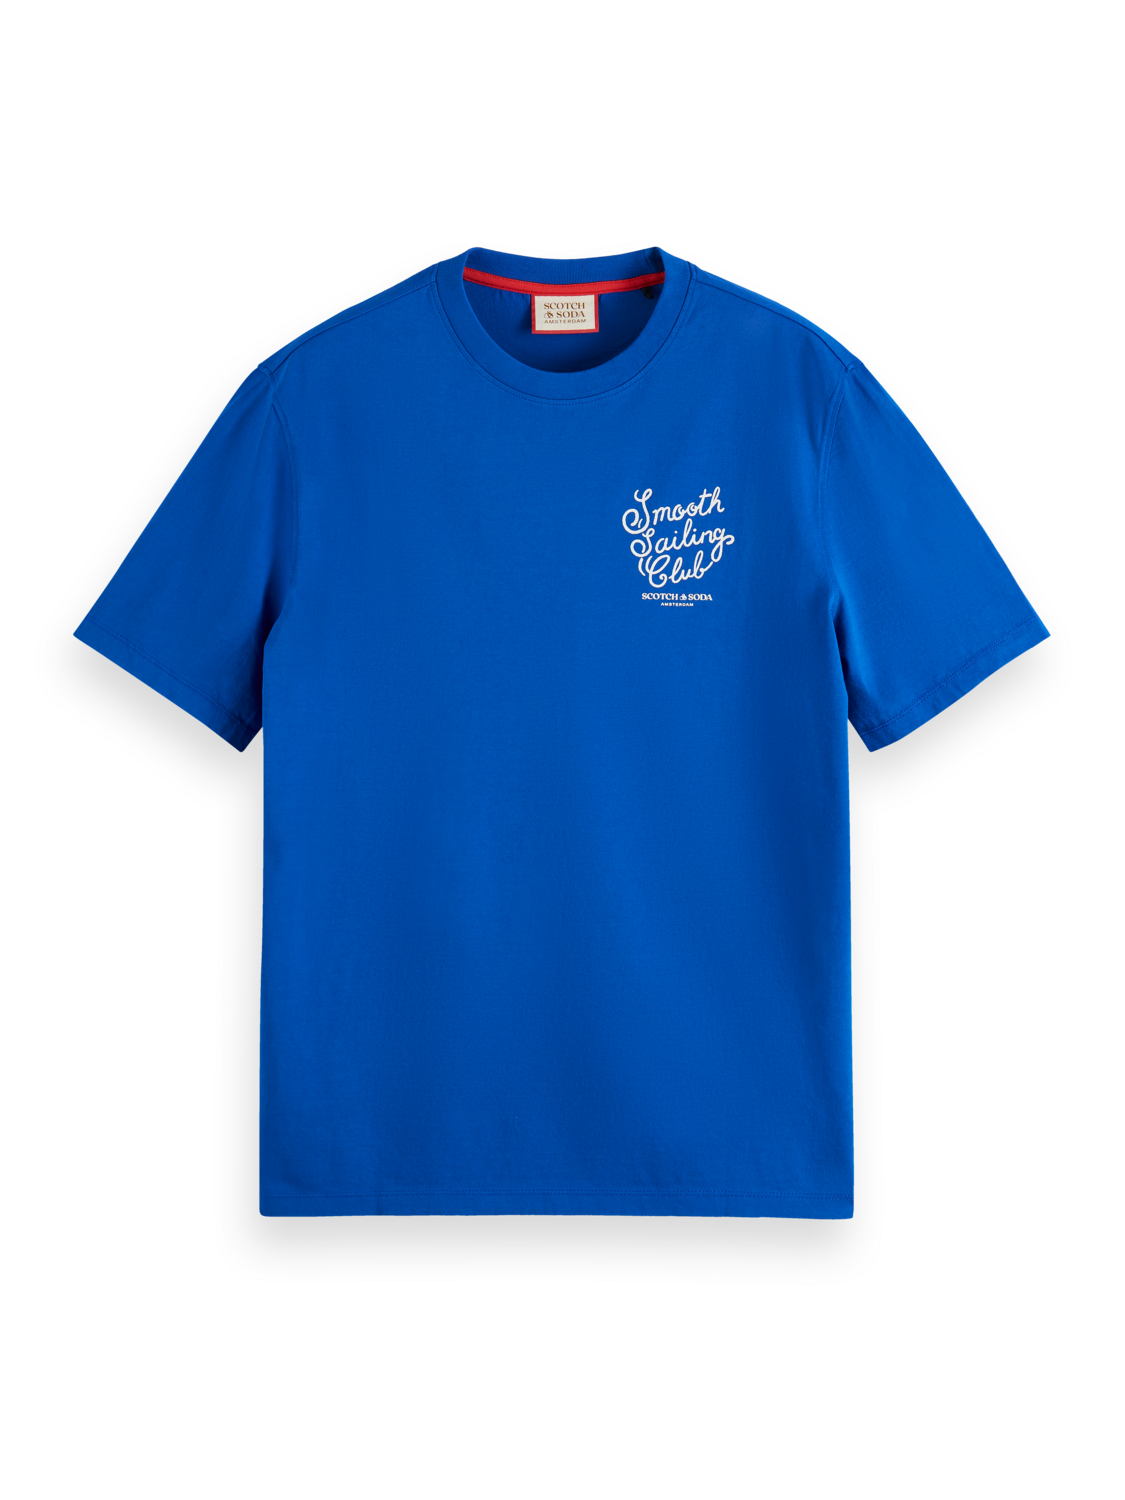 SCOTCH AND SODA T Shirt Royal Blue